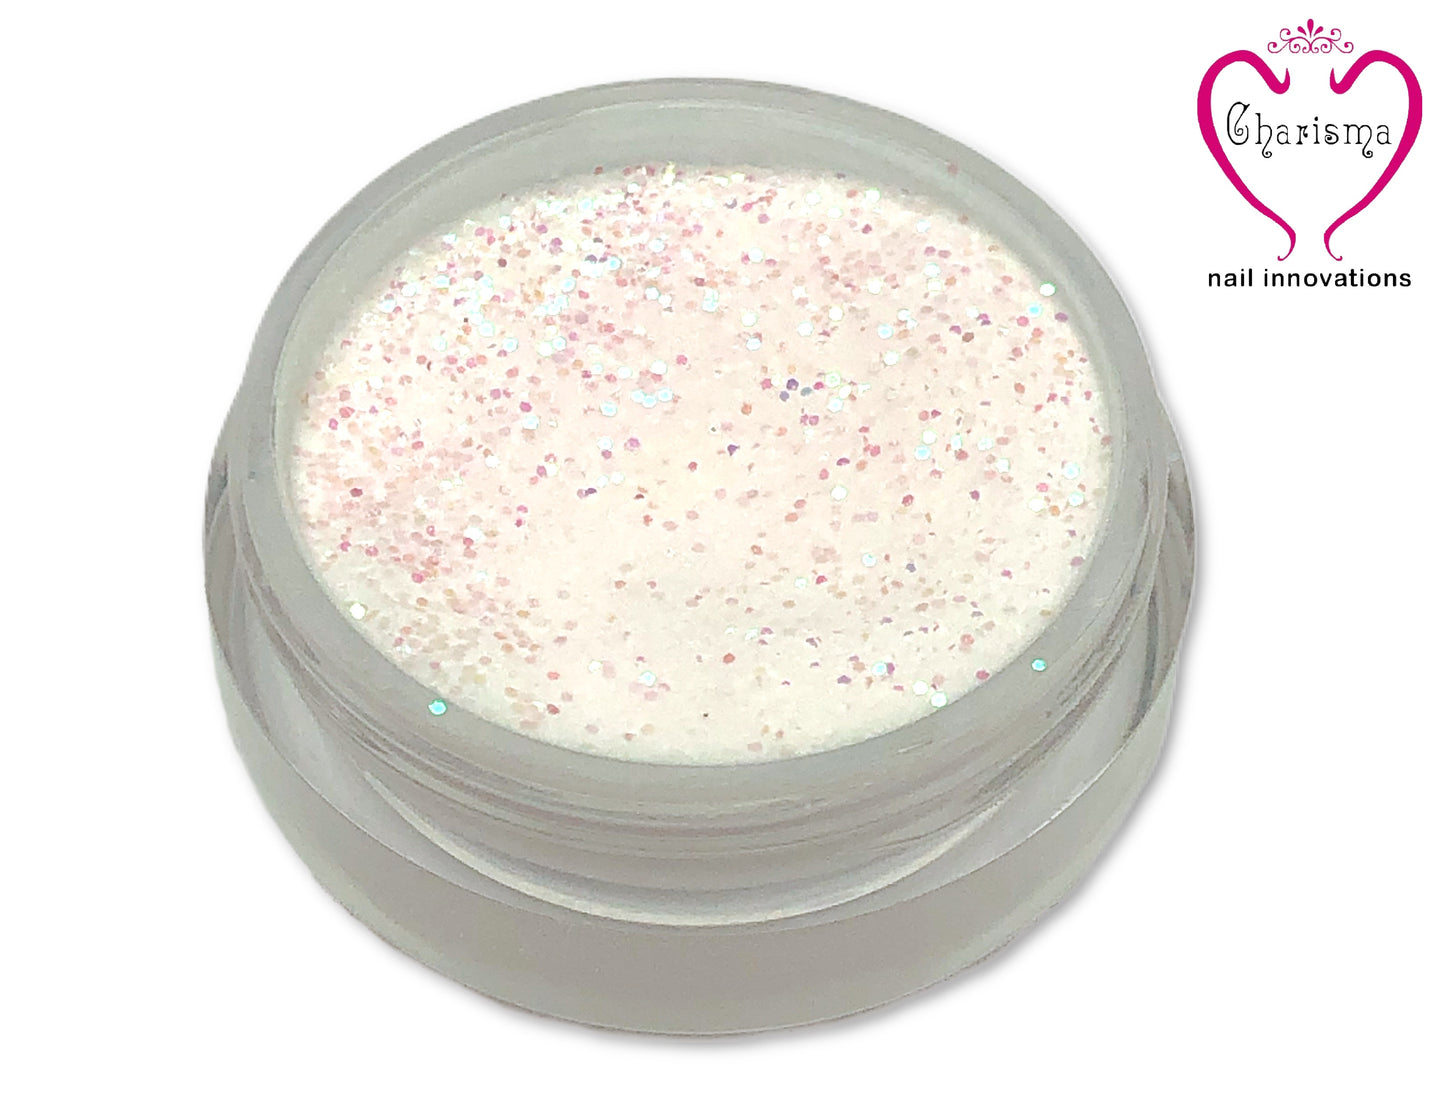 Charisma Nail Acrylic Powder - Translucent Pixie Pink - My Little Nail Art Shop